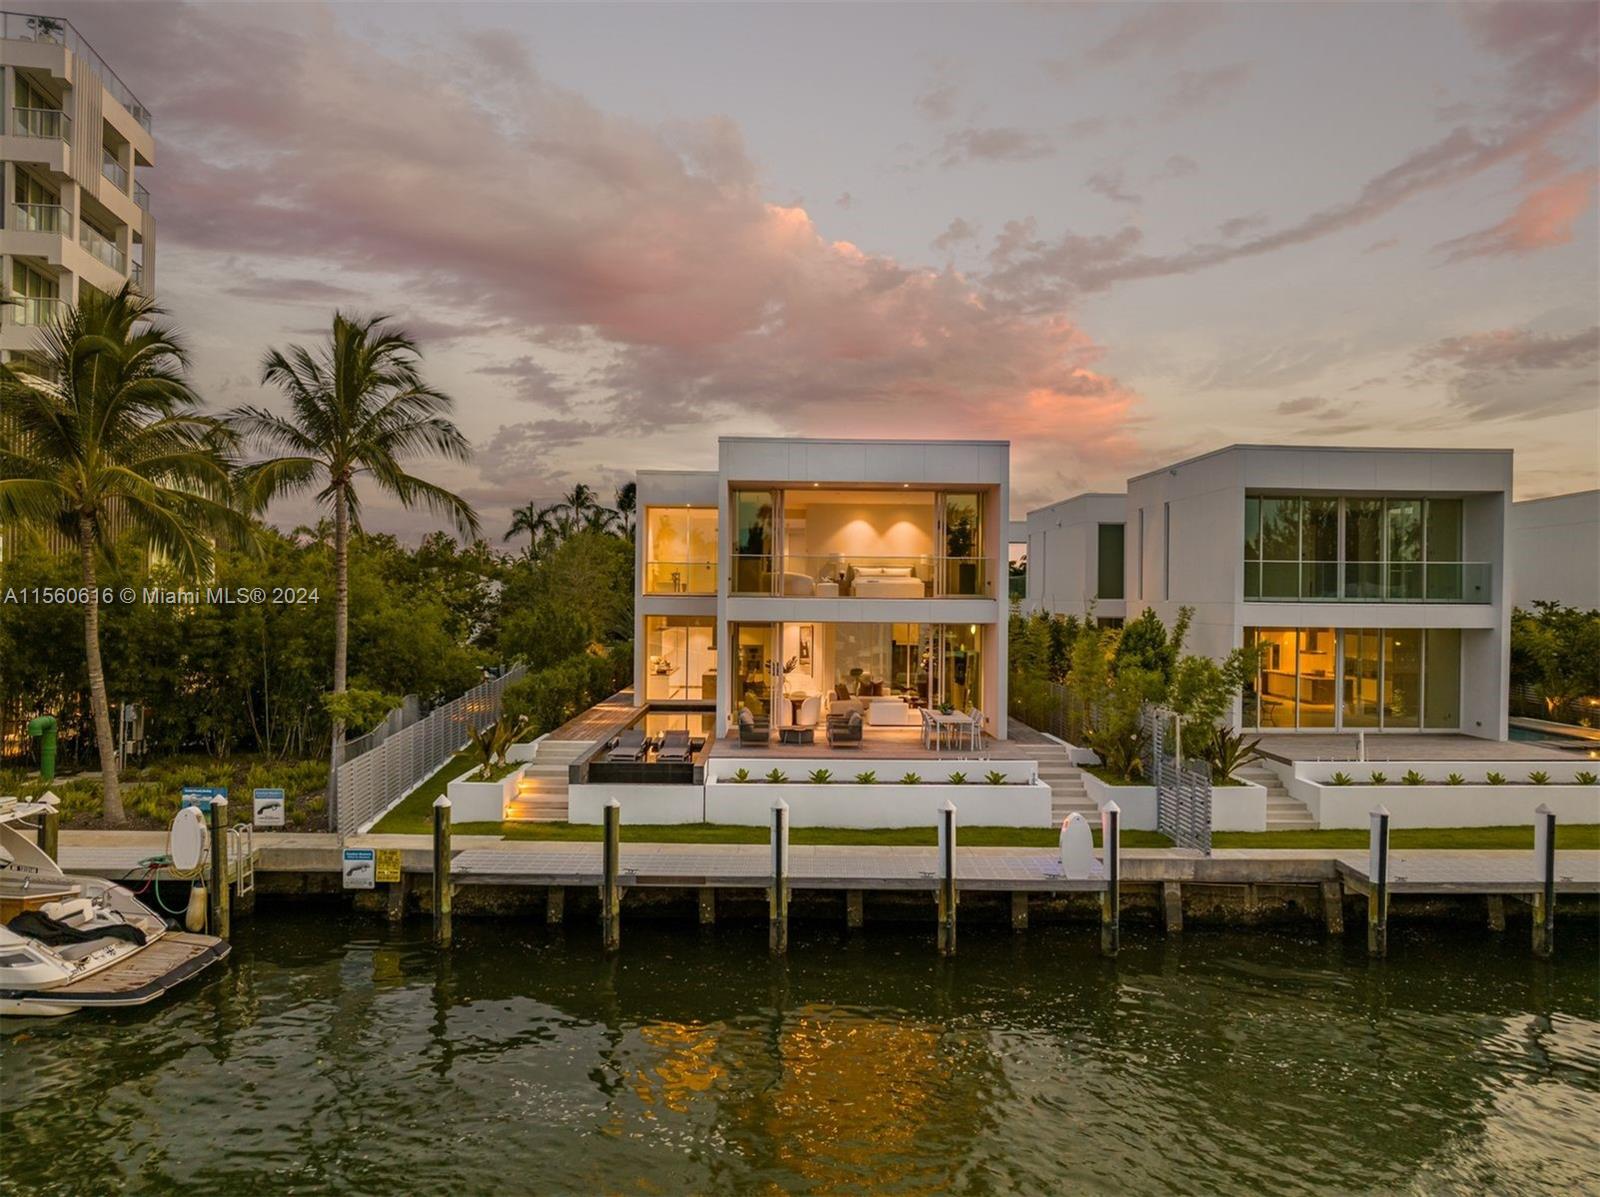 Rental Property at 1011 W 48th St - The Ritz Carlton Residences St, Miami Beach, Miami-Dade County, Florida - Bedrooms: 4 
Bathrooms: 5  - $65,000 MO.